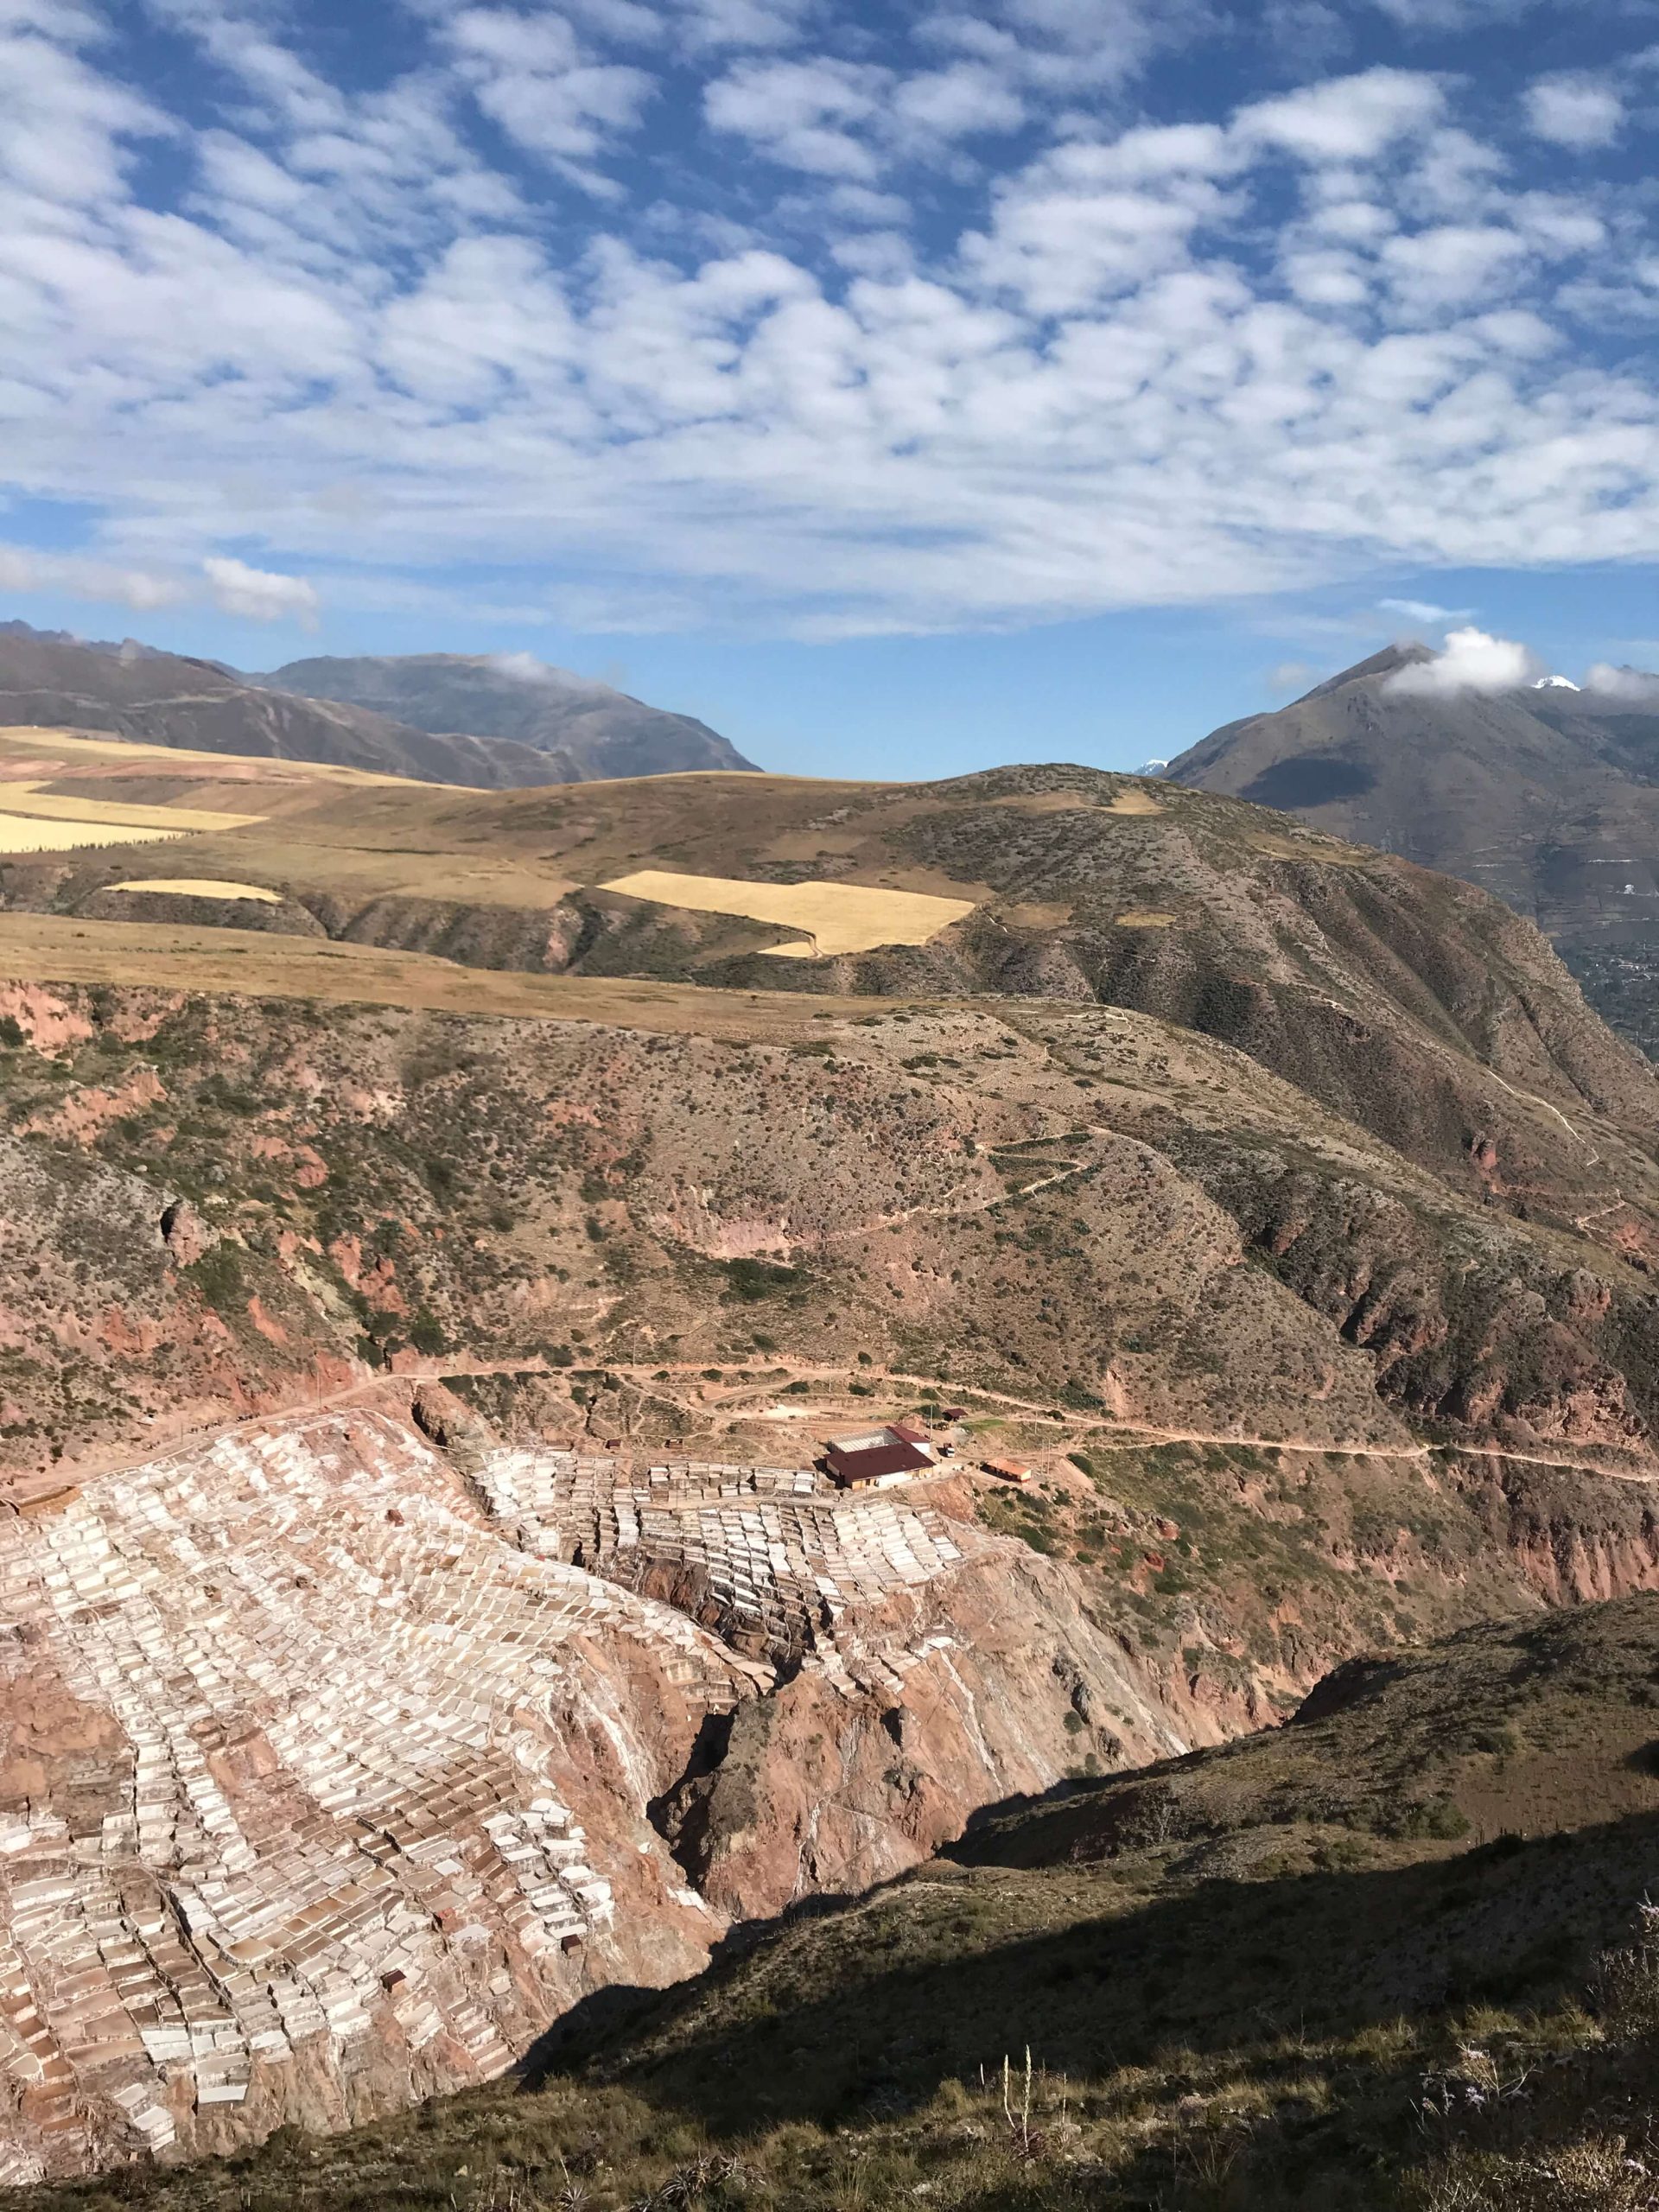 Maras Salt Mines an epic place in Peru